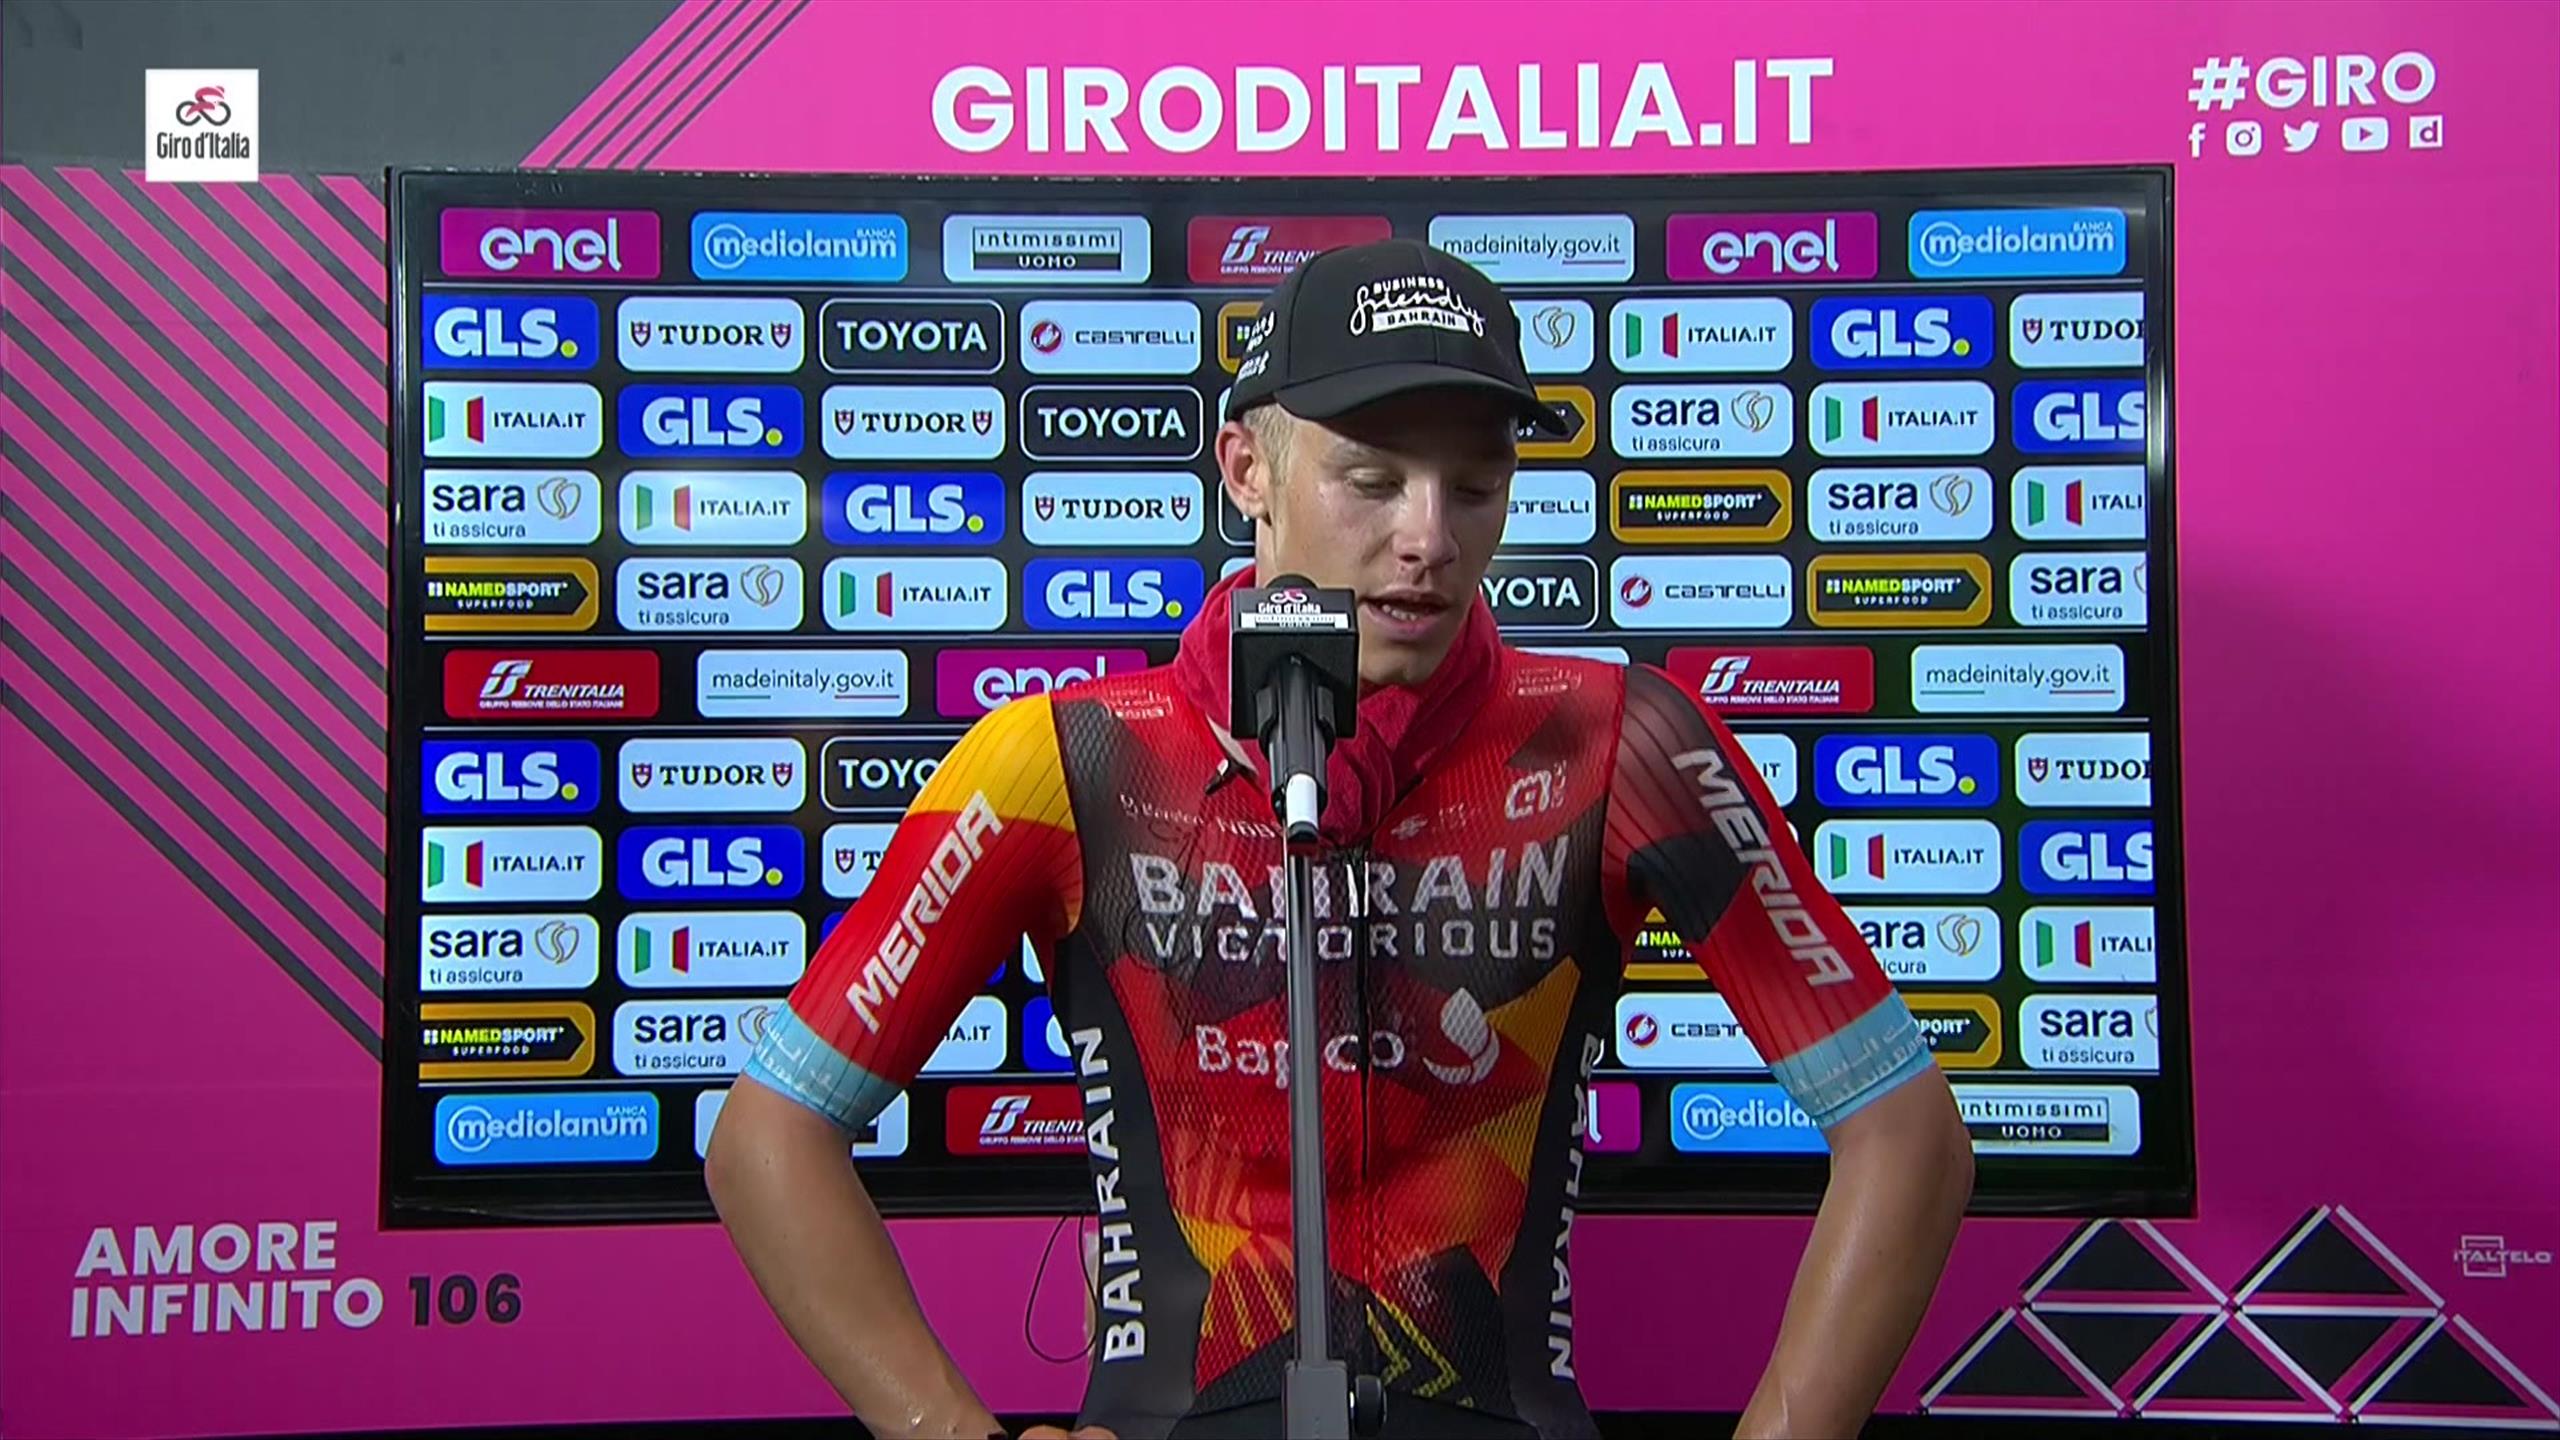 Milan: "Primo Giro e subito vittoria, non riesco a crederci"